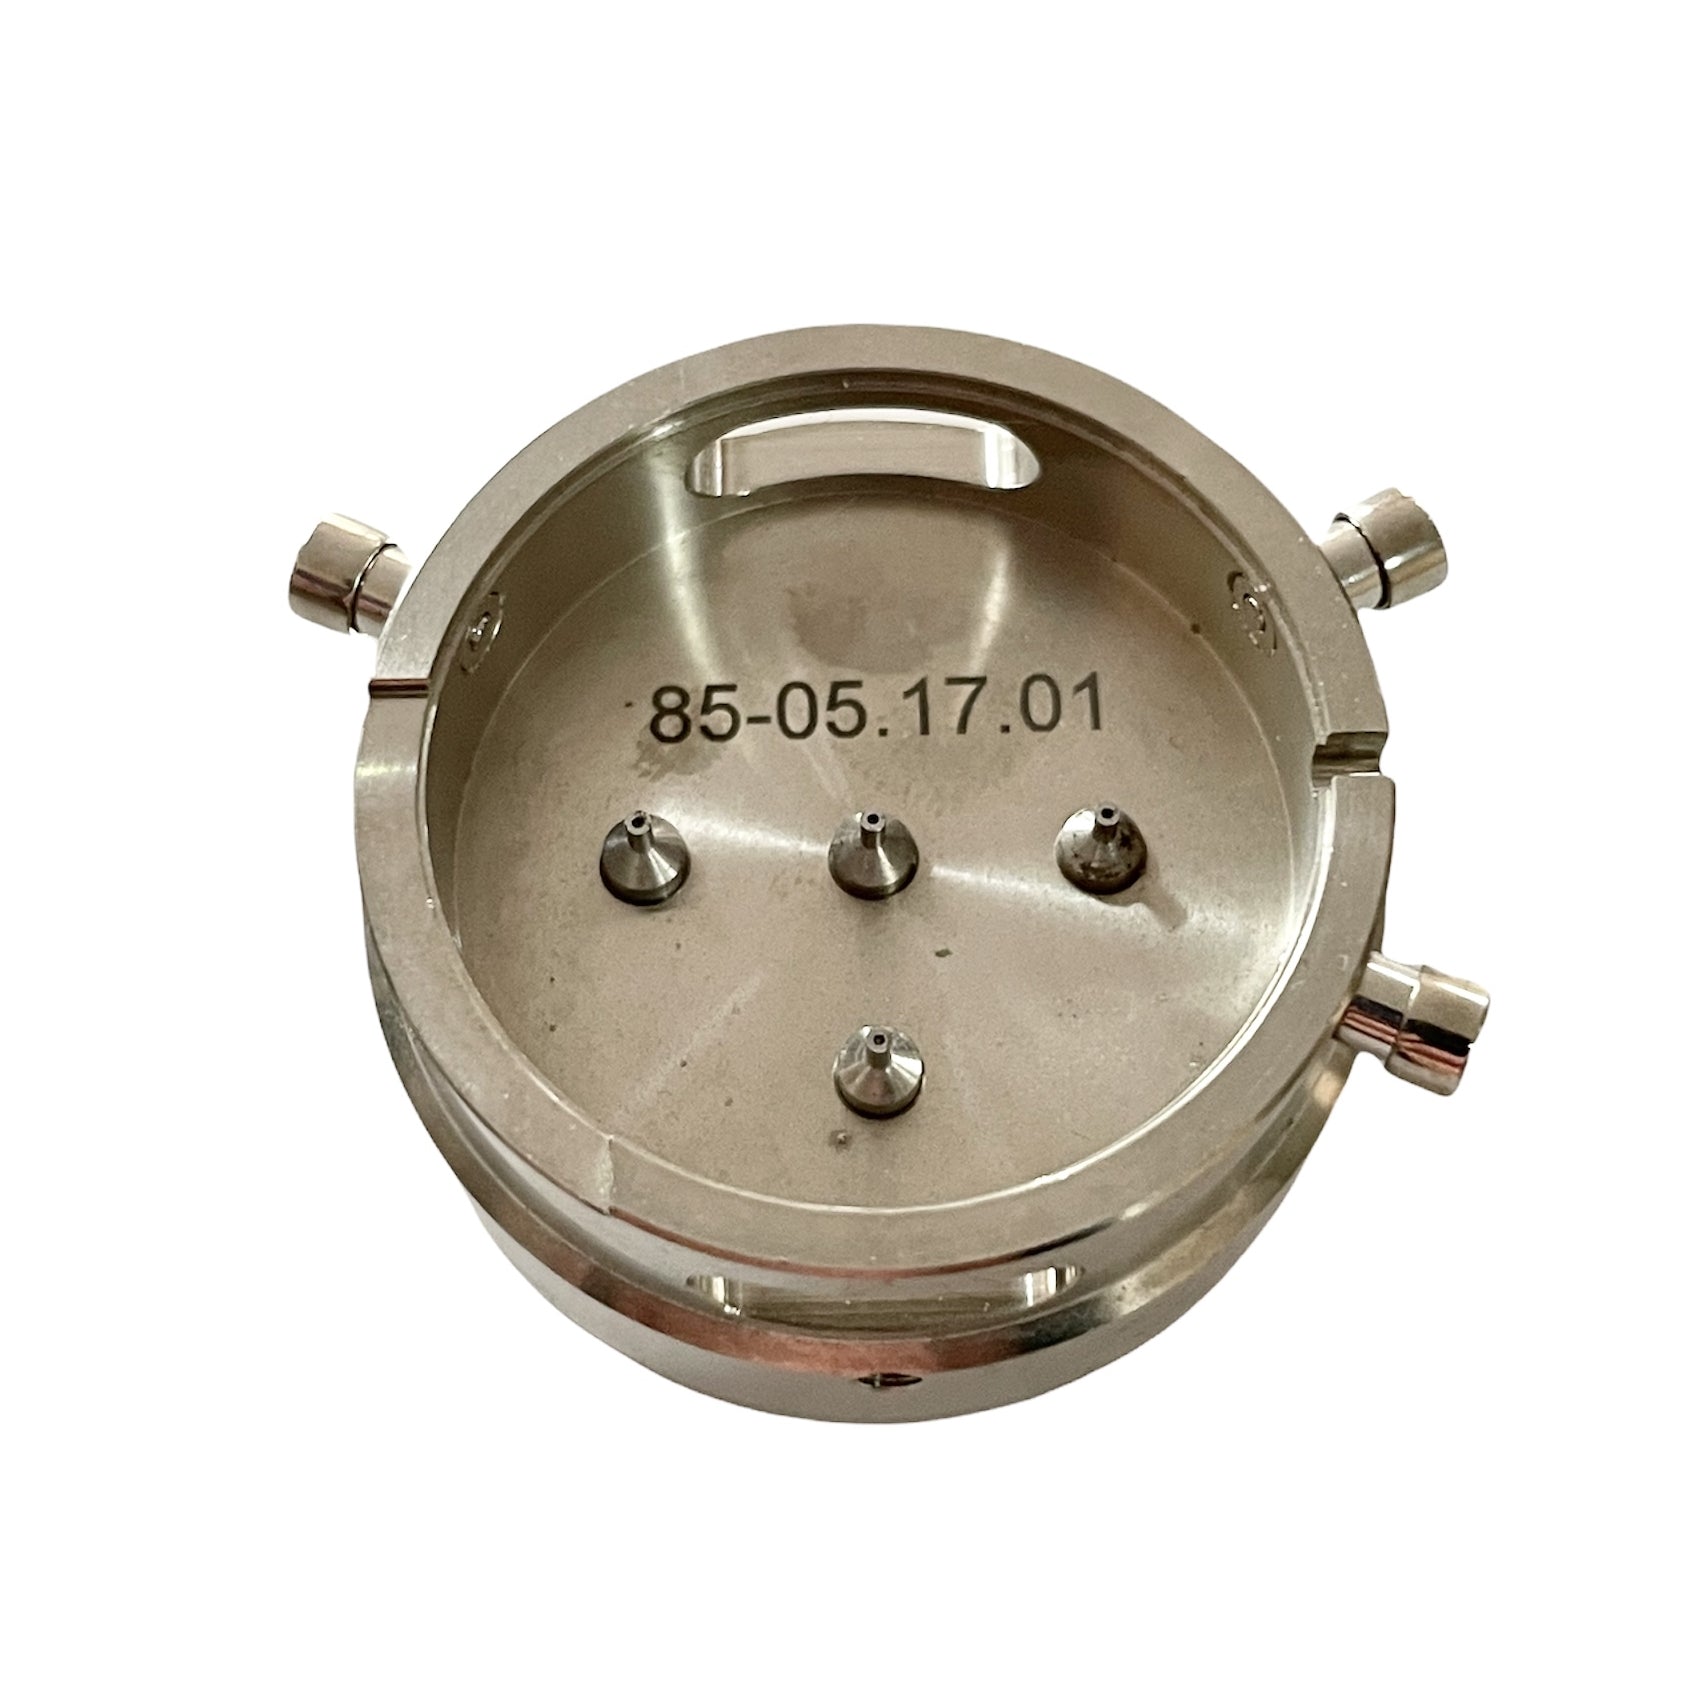 New Audemars Piguet 2385 metal movement holder with chronograph button –